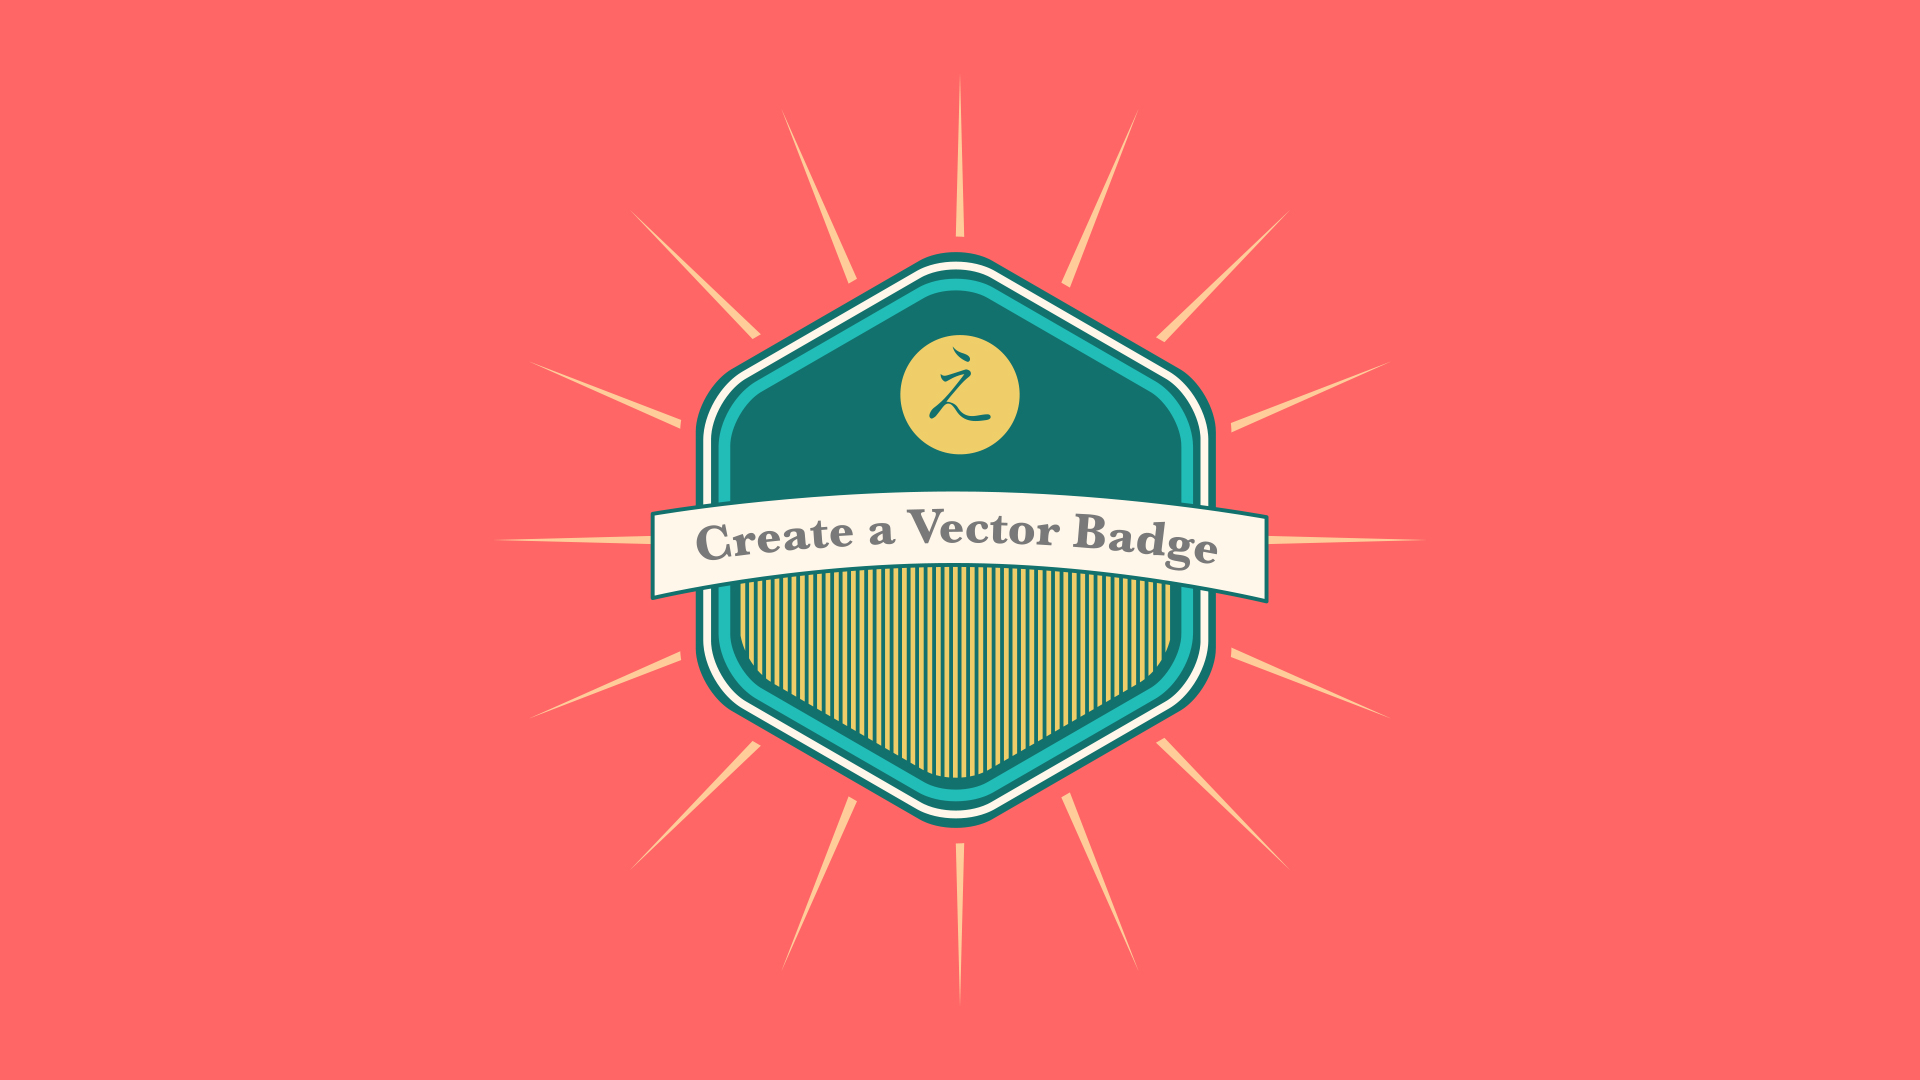 Vectornator X tutorial | Create a Vector Badge